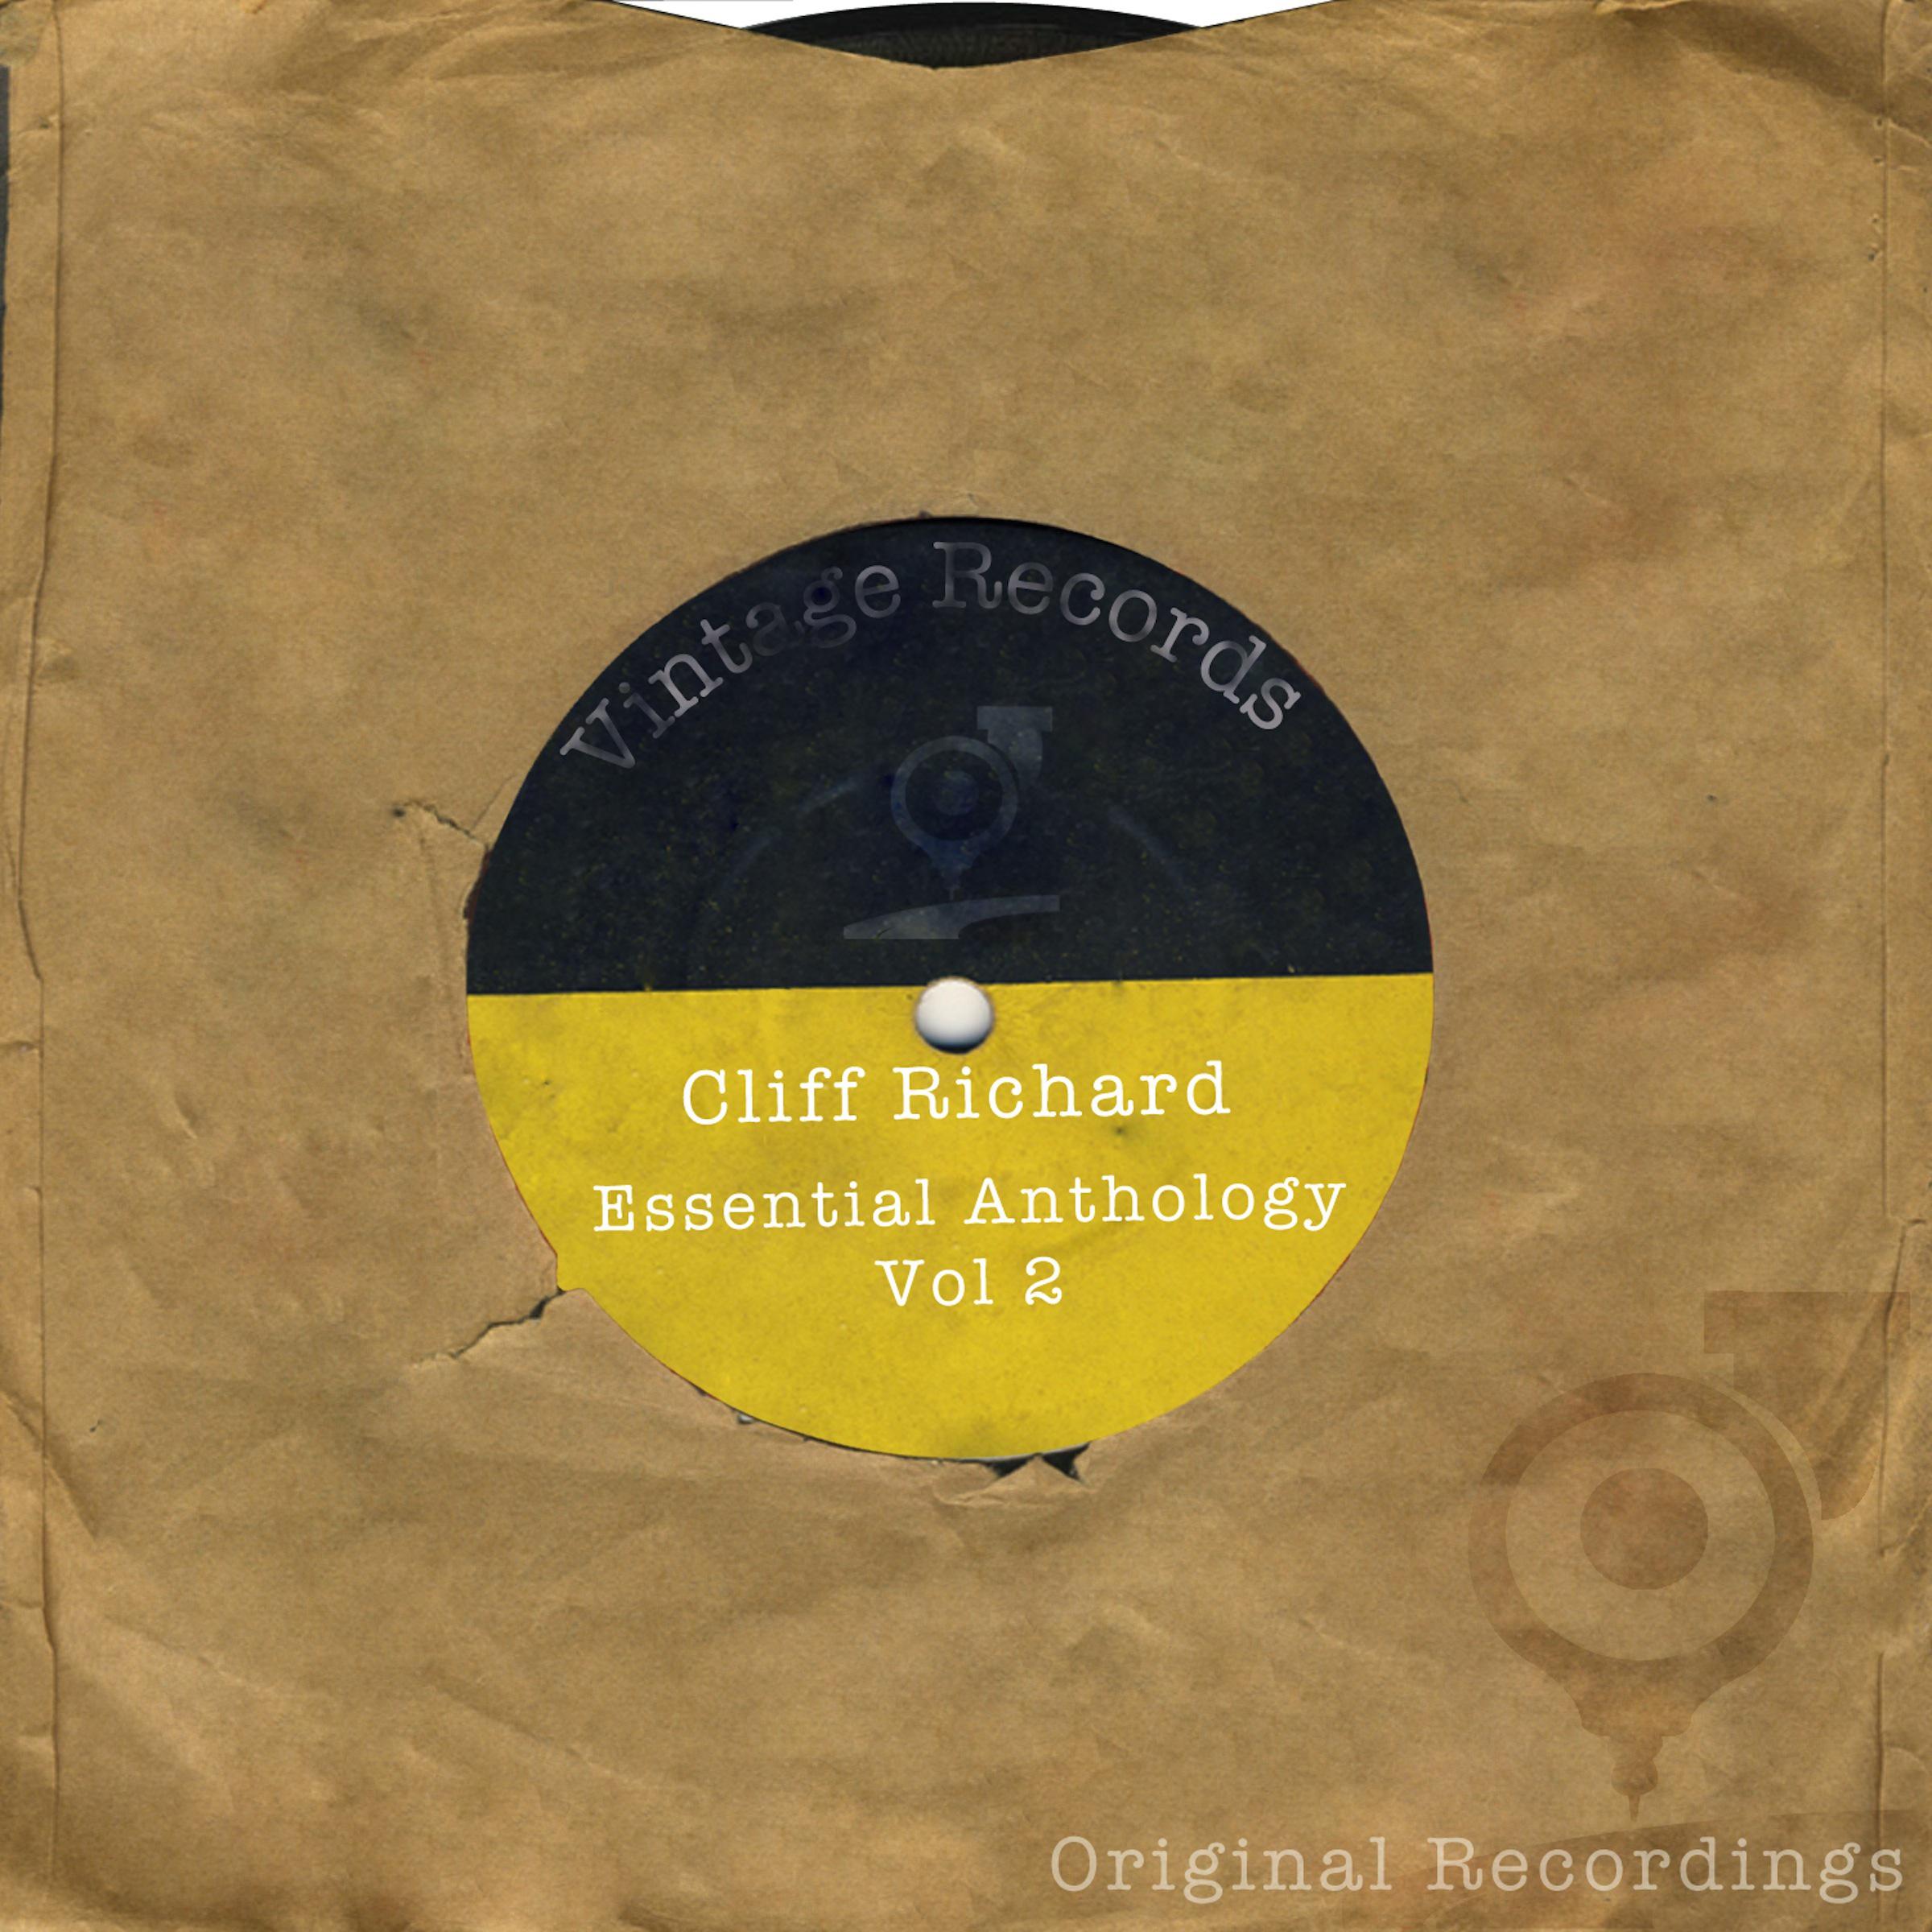 Cliff Richard Essential Anthology Vol 2